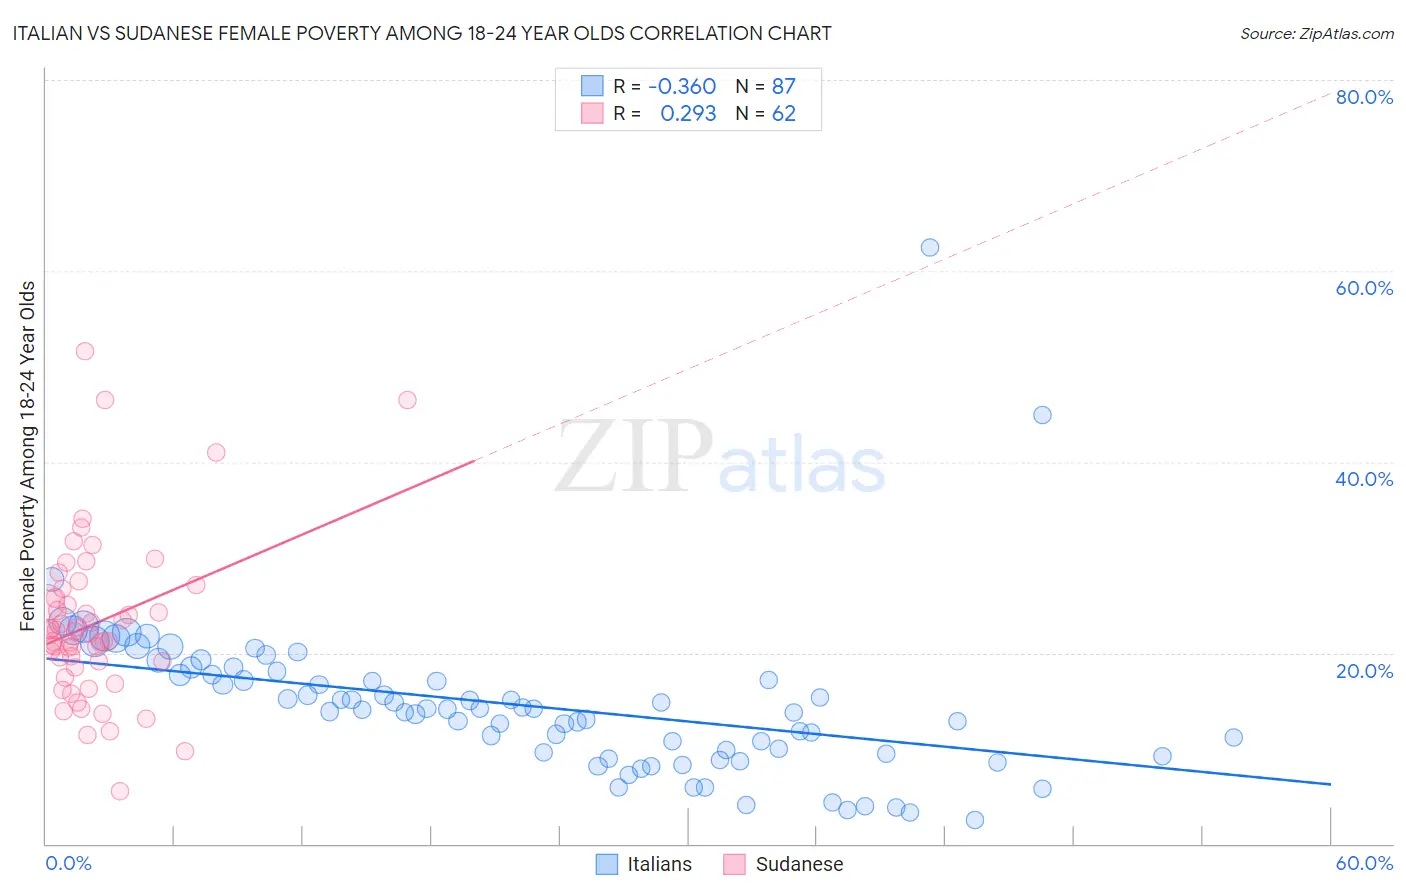 Italian vs Sudanese Female Poverty Among 18-24 Year Olds